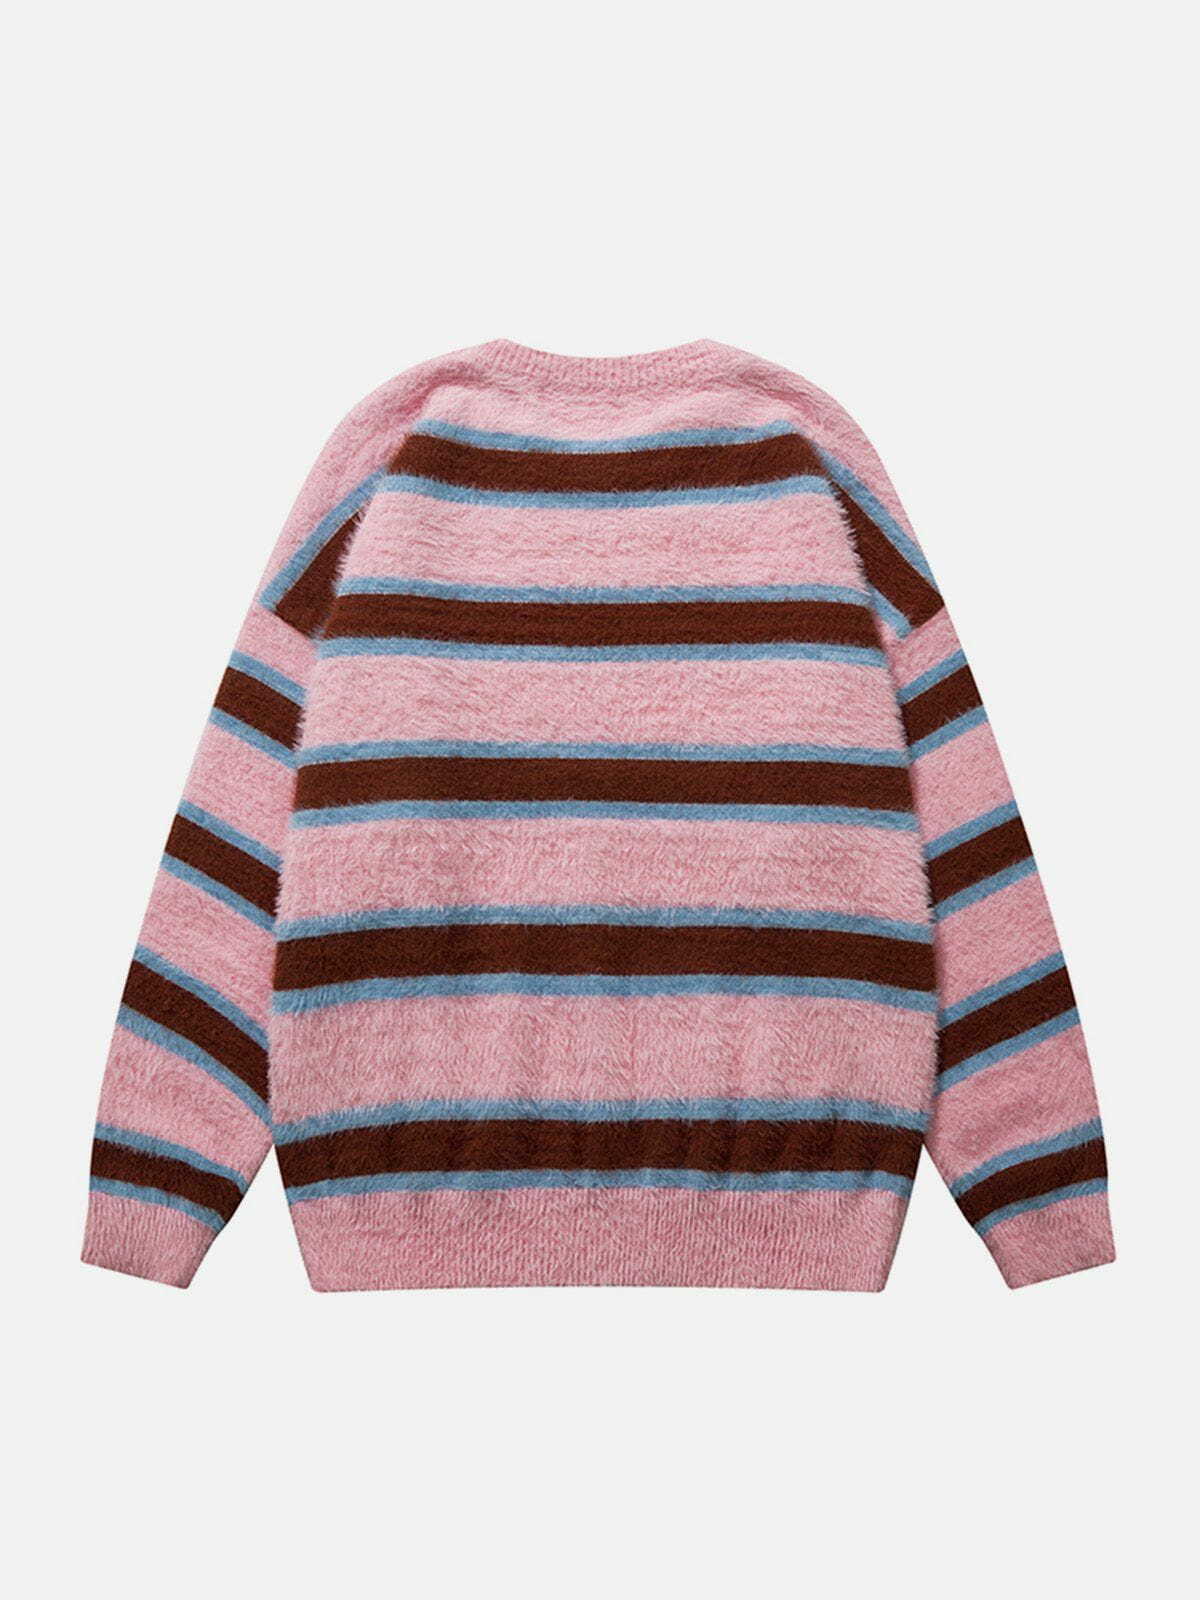 striped jacquard sweater edgy urban knitwear 7809